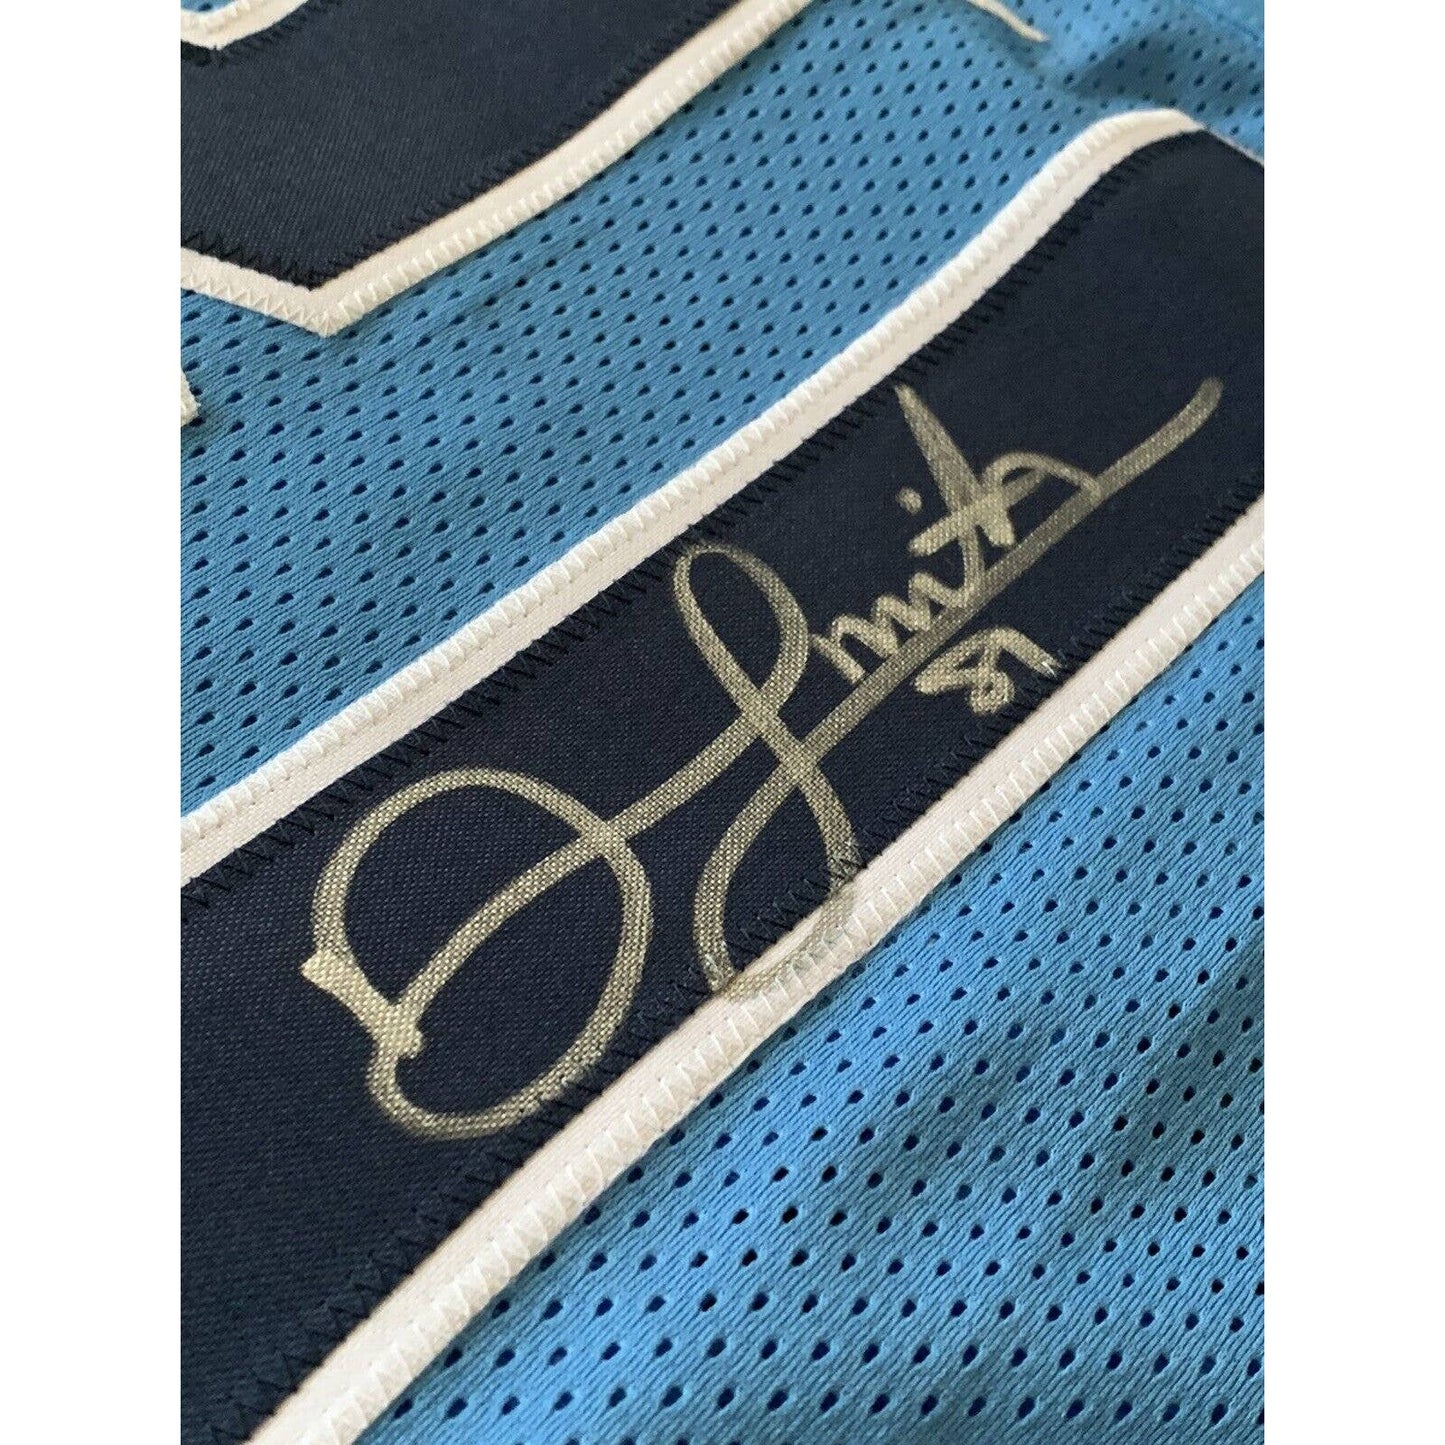 Jonnu Smith Autographed/Signed Jersey COA Tennessee Titans - TreasuresEvolved